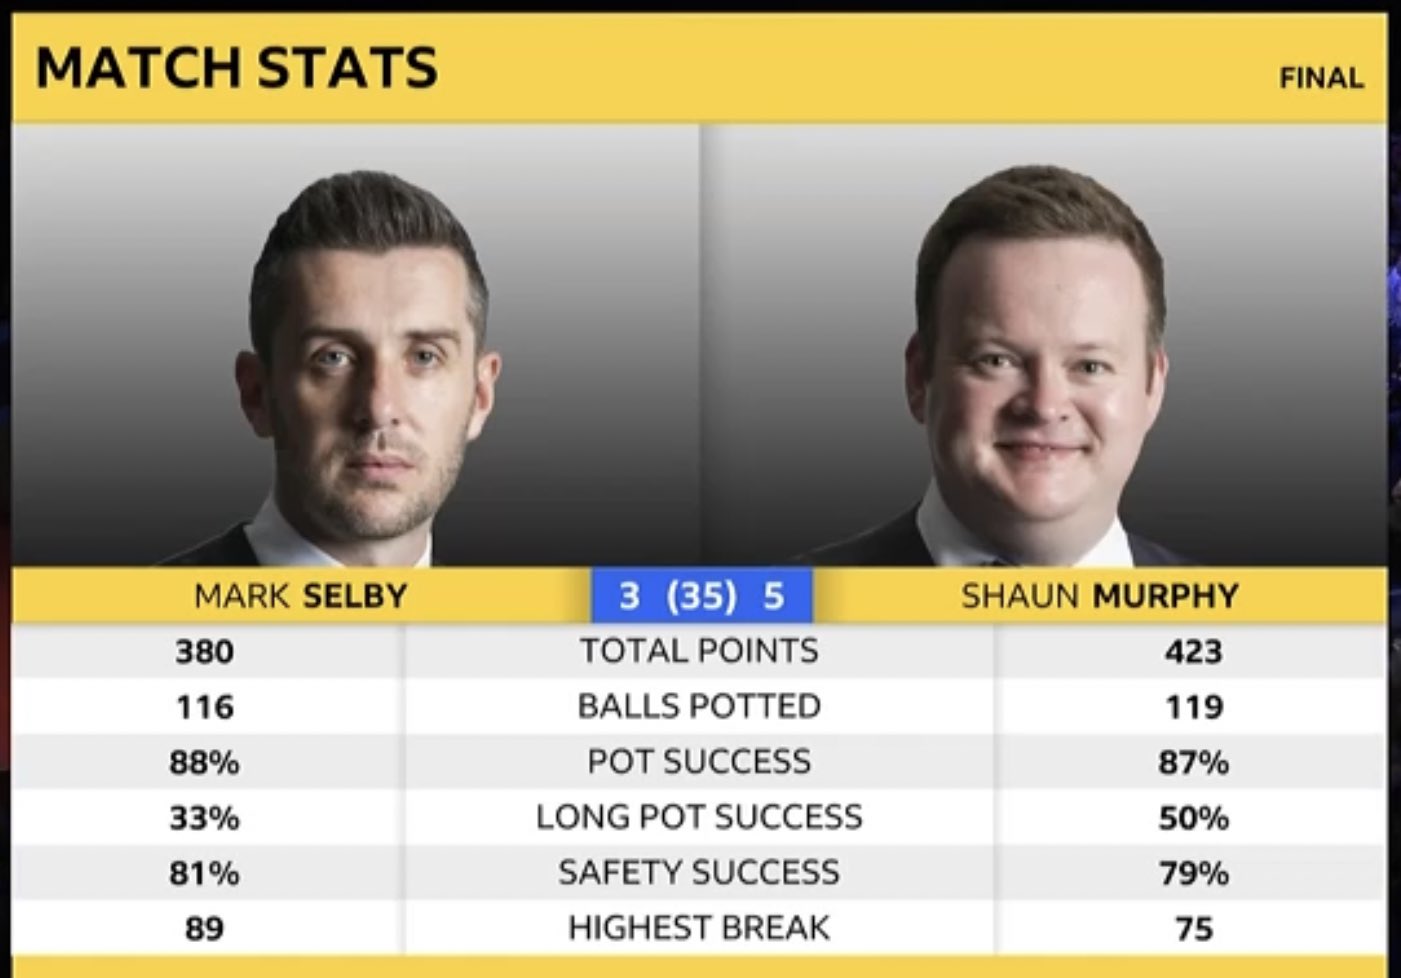 Matchstatistik nach der ersten Session: Selby 3–5 Murphy; Locherfolg: 88% Selby, 87% Murphy; Locherfolg für lange Bälle 33% Selby, 50% Murphy